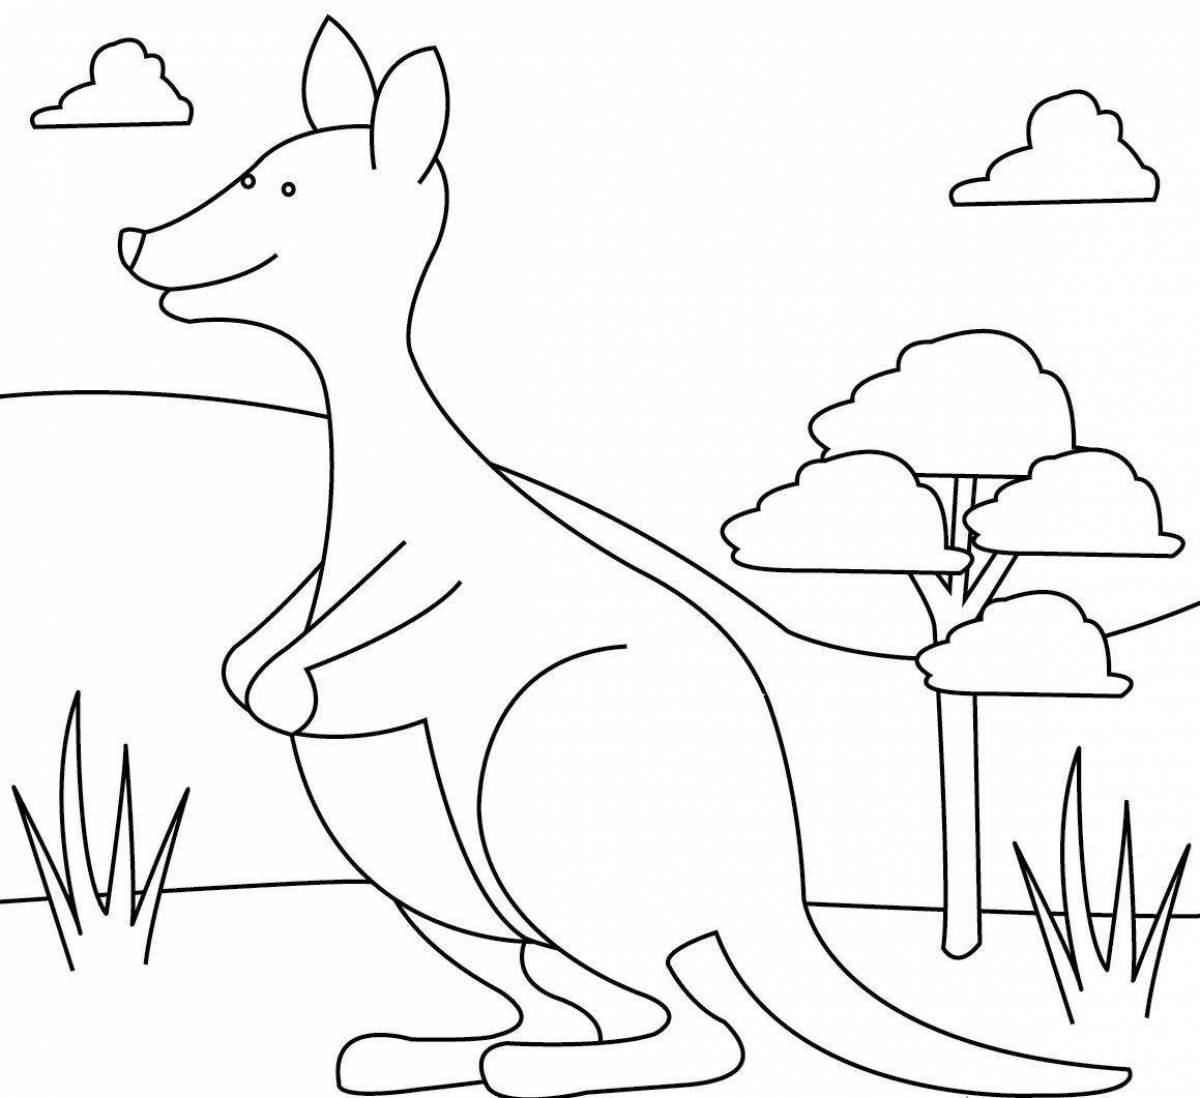 Incredible Australian animal coloring book for kids